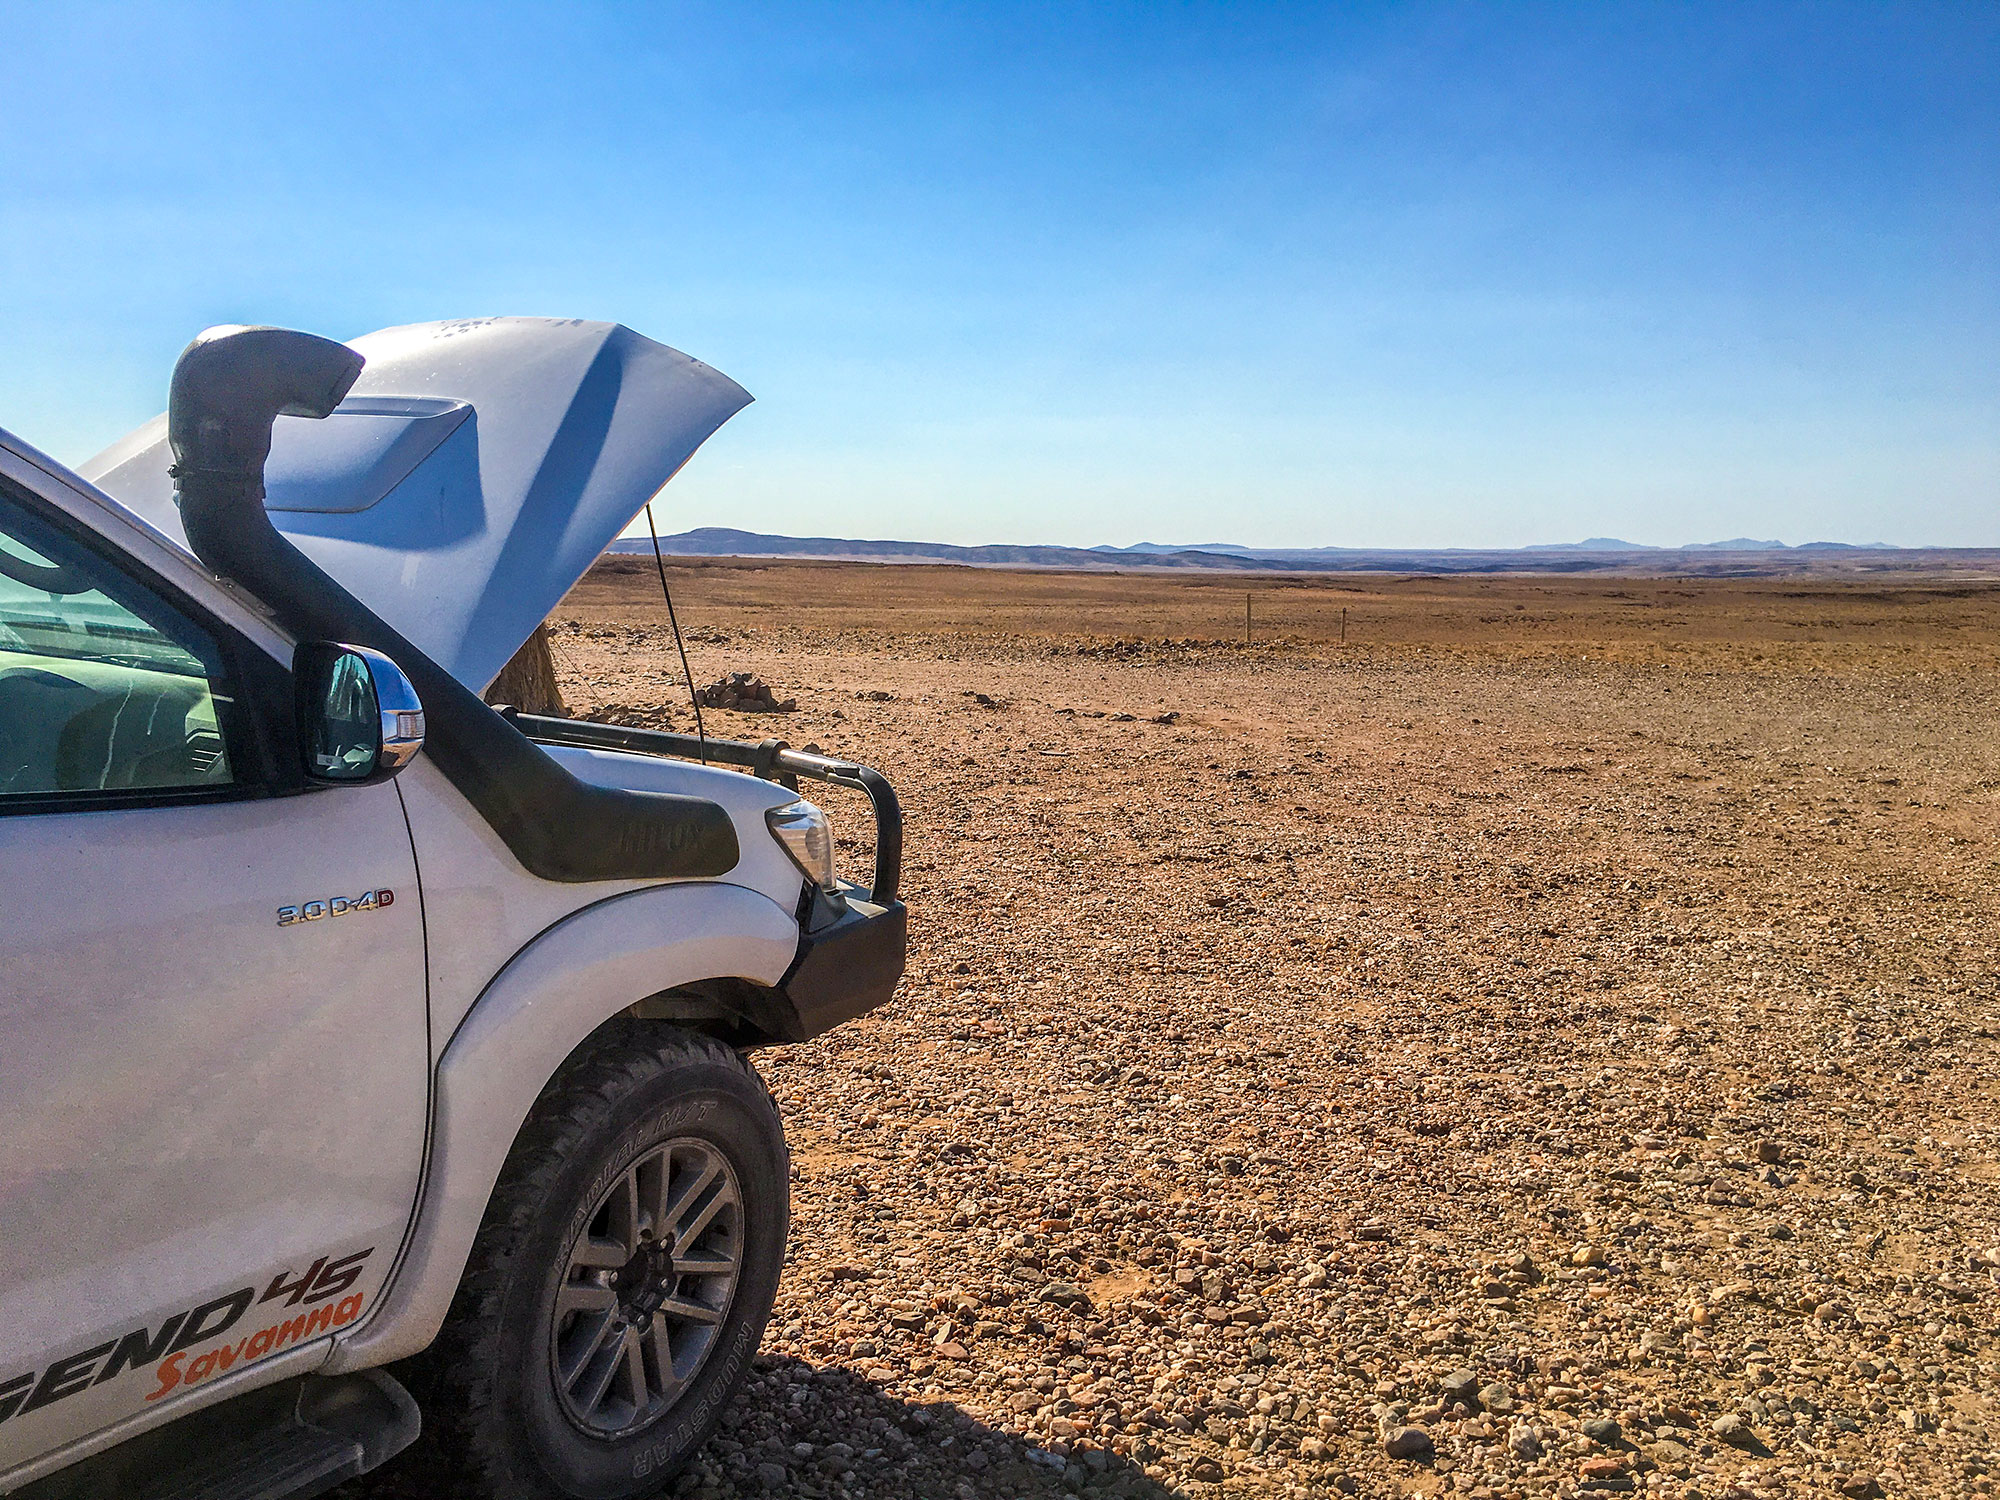 Toyota Hilux 4x4 broken down in Namib Desert, Namibia, Africa